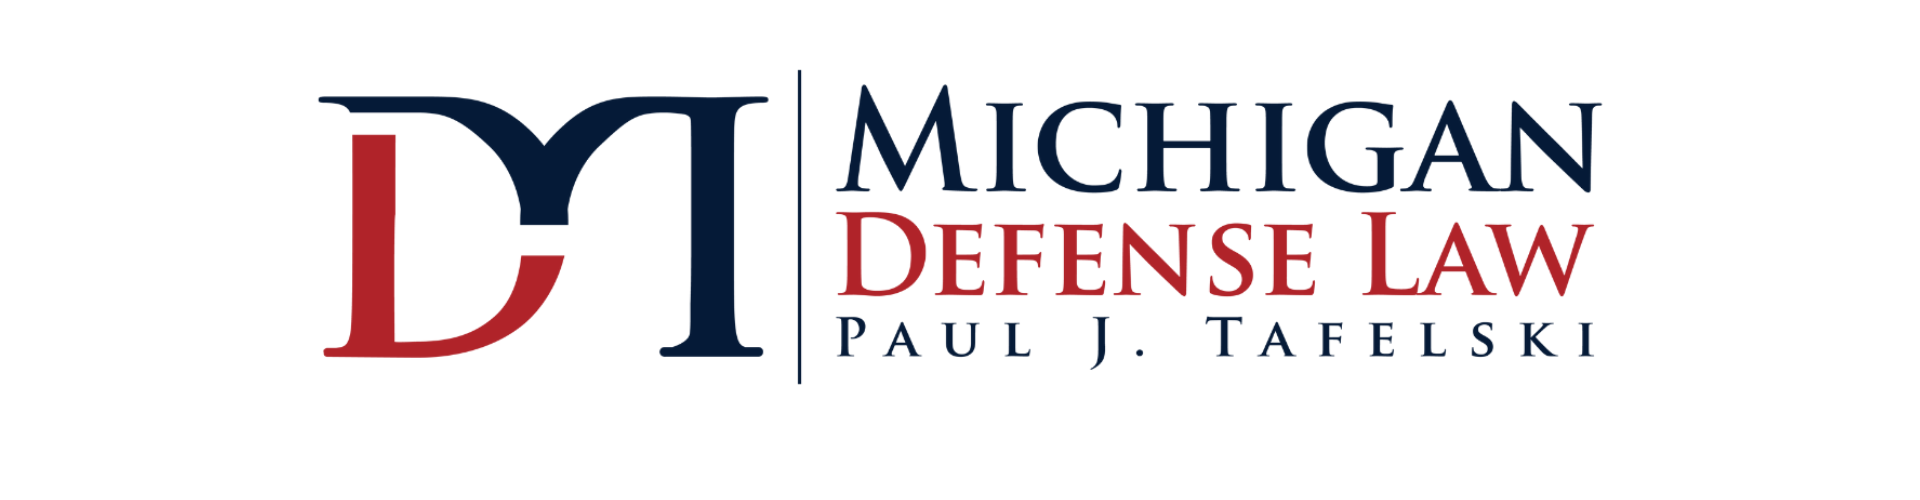 Paul J. Tafelski, Michigan Defense Law